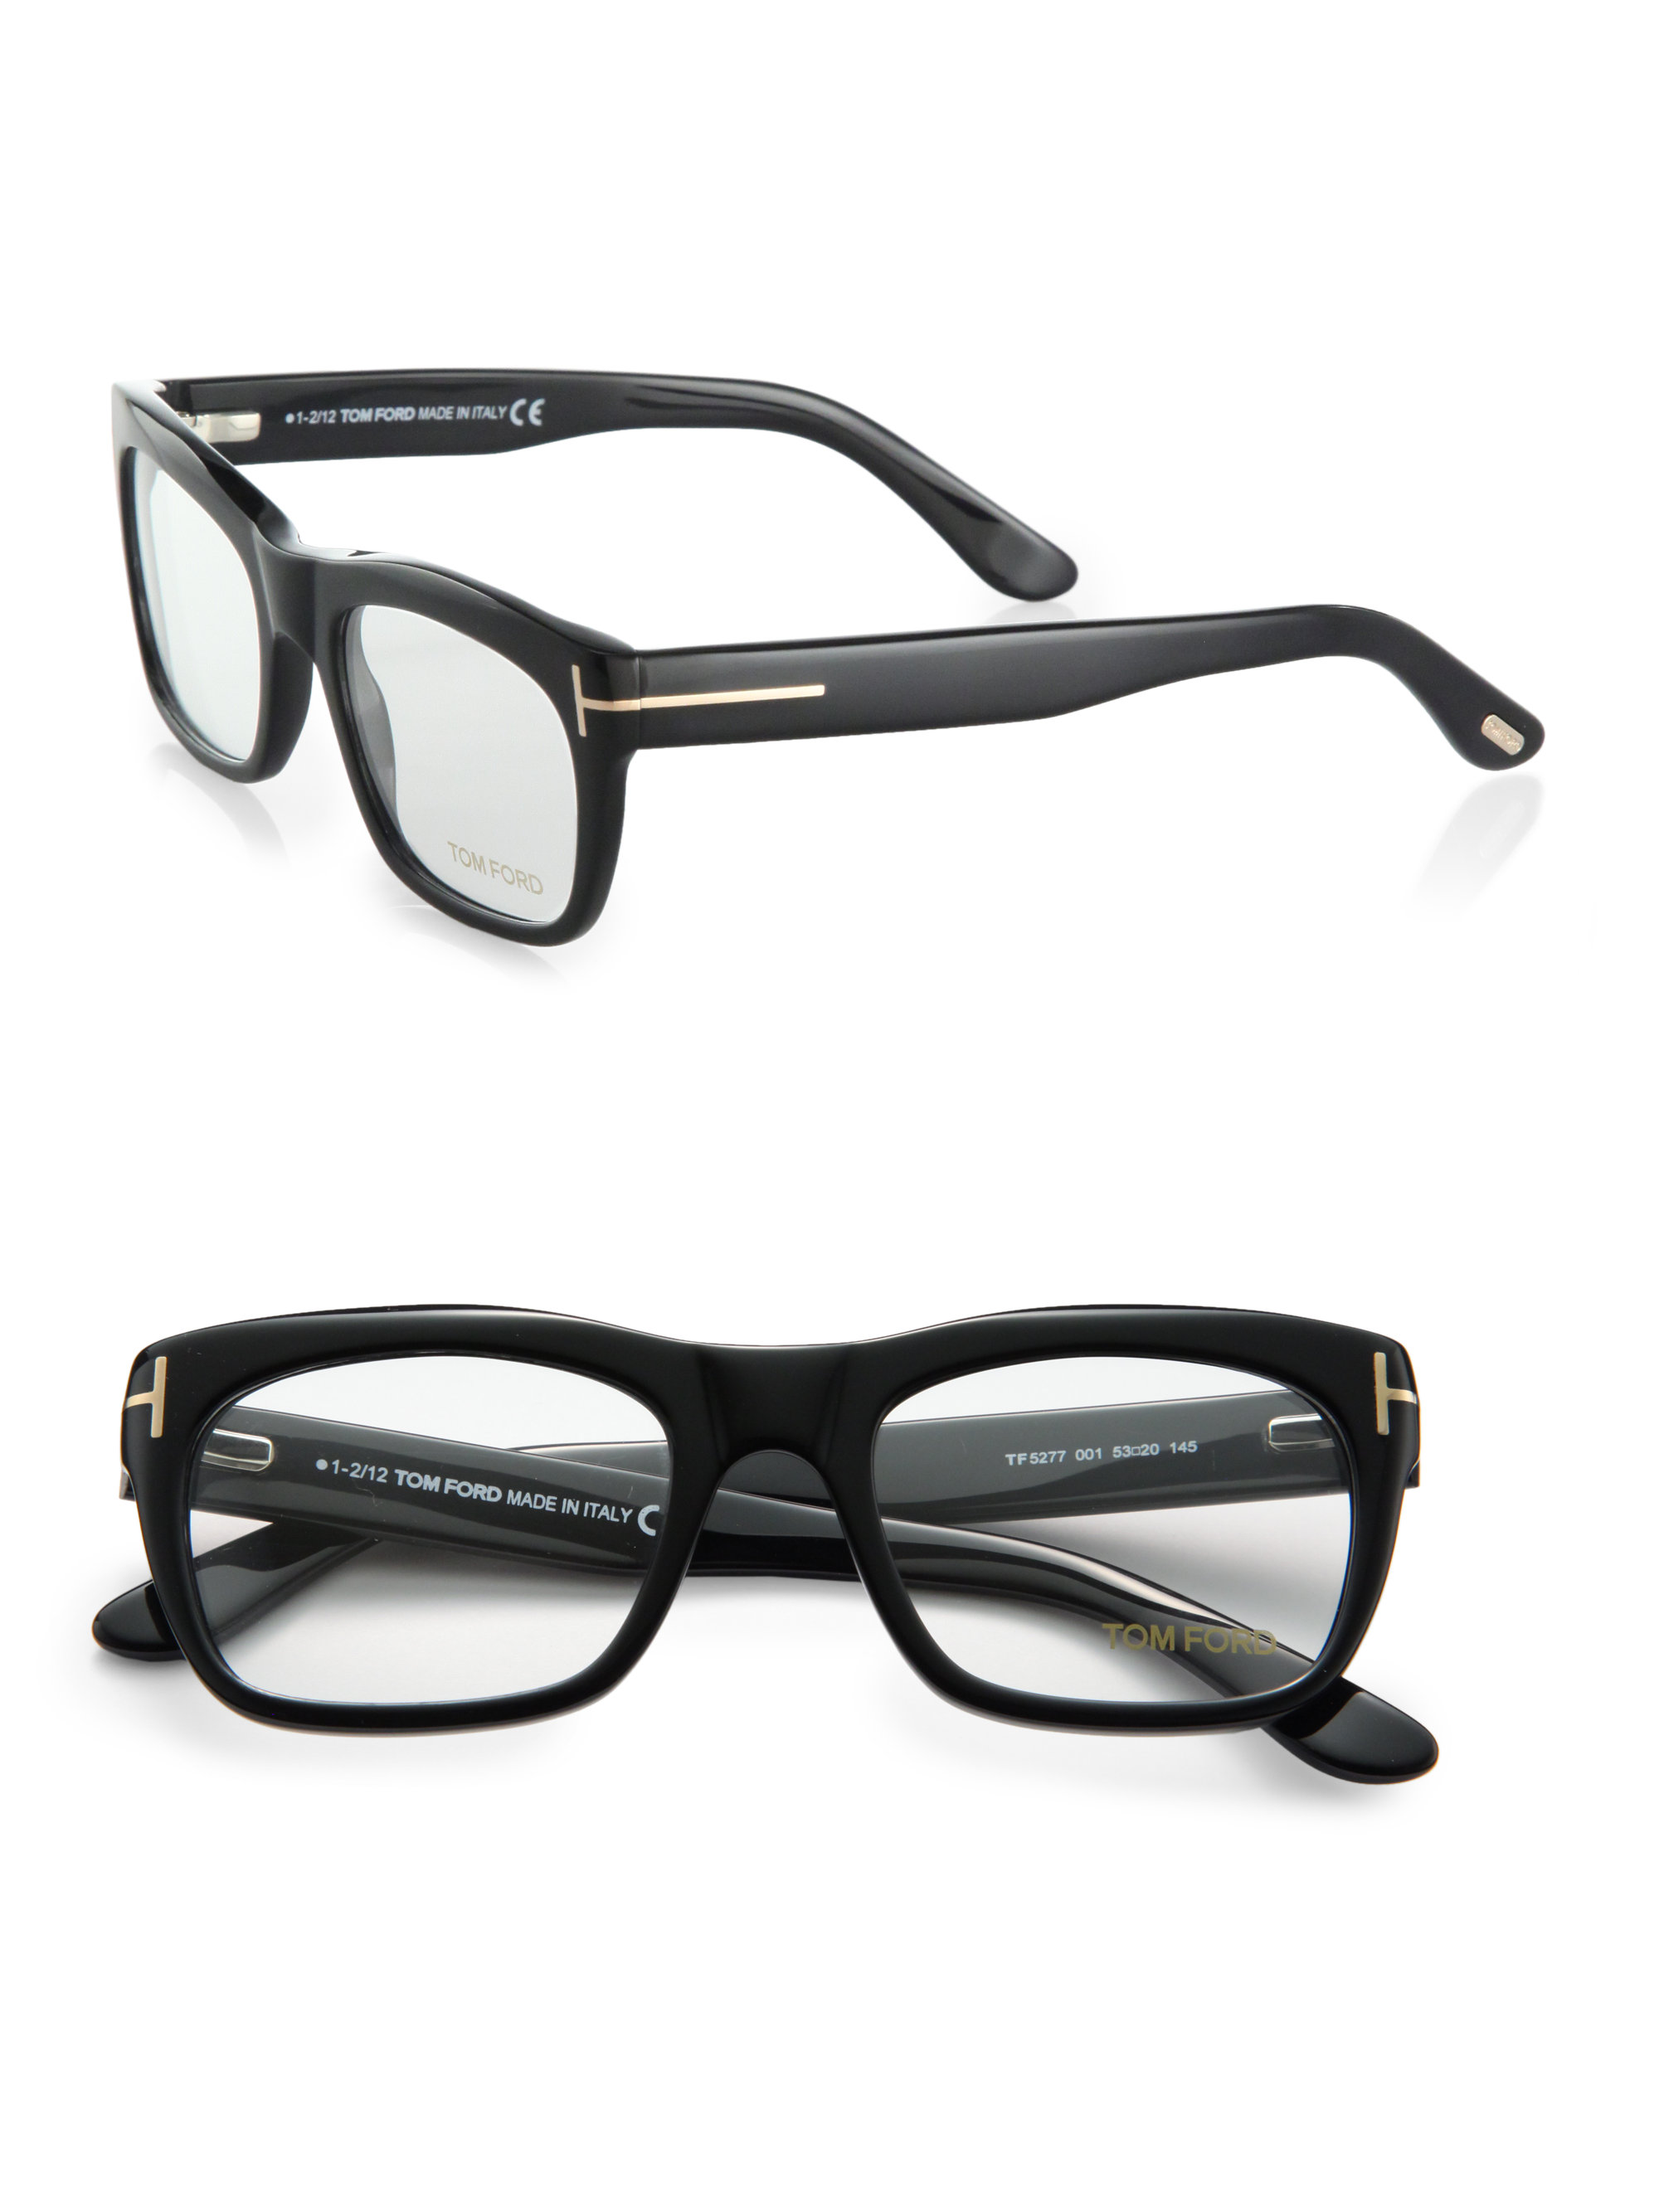 Tom ford Square Acetate Eyeglasses in Black | Lyst